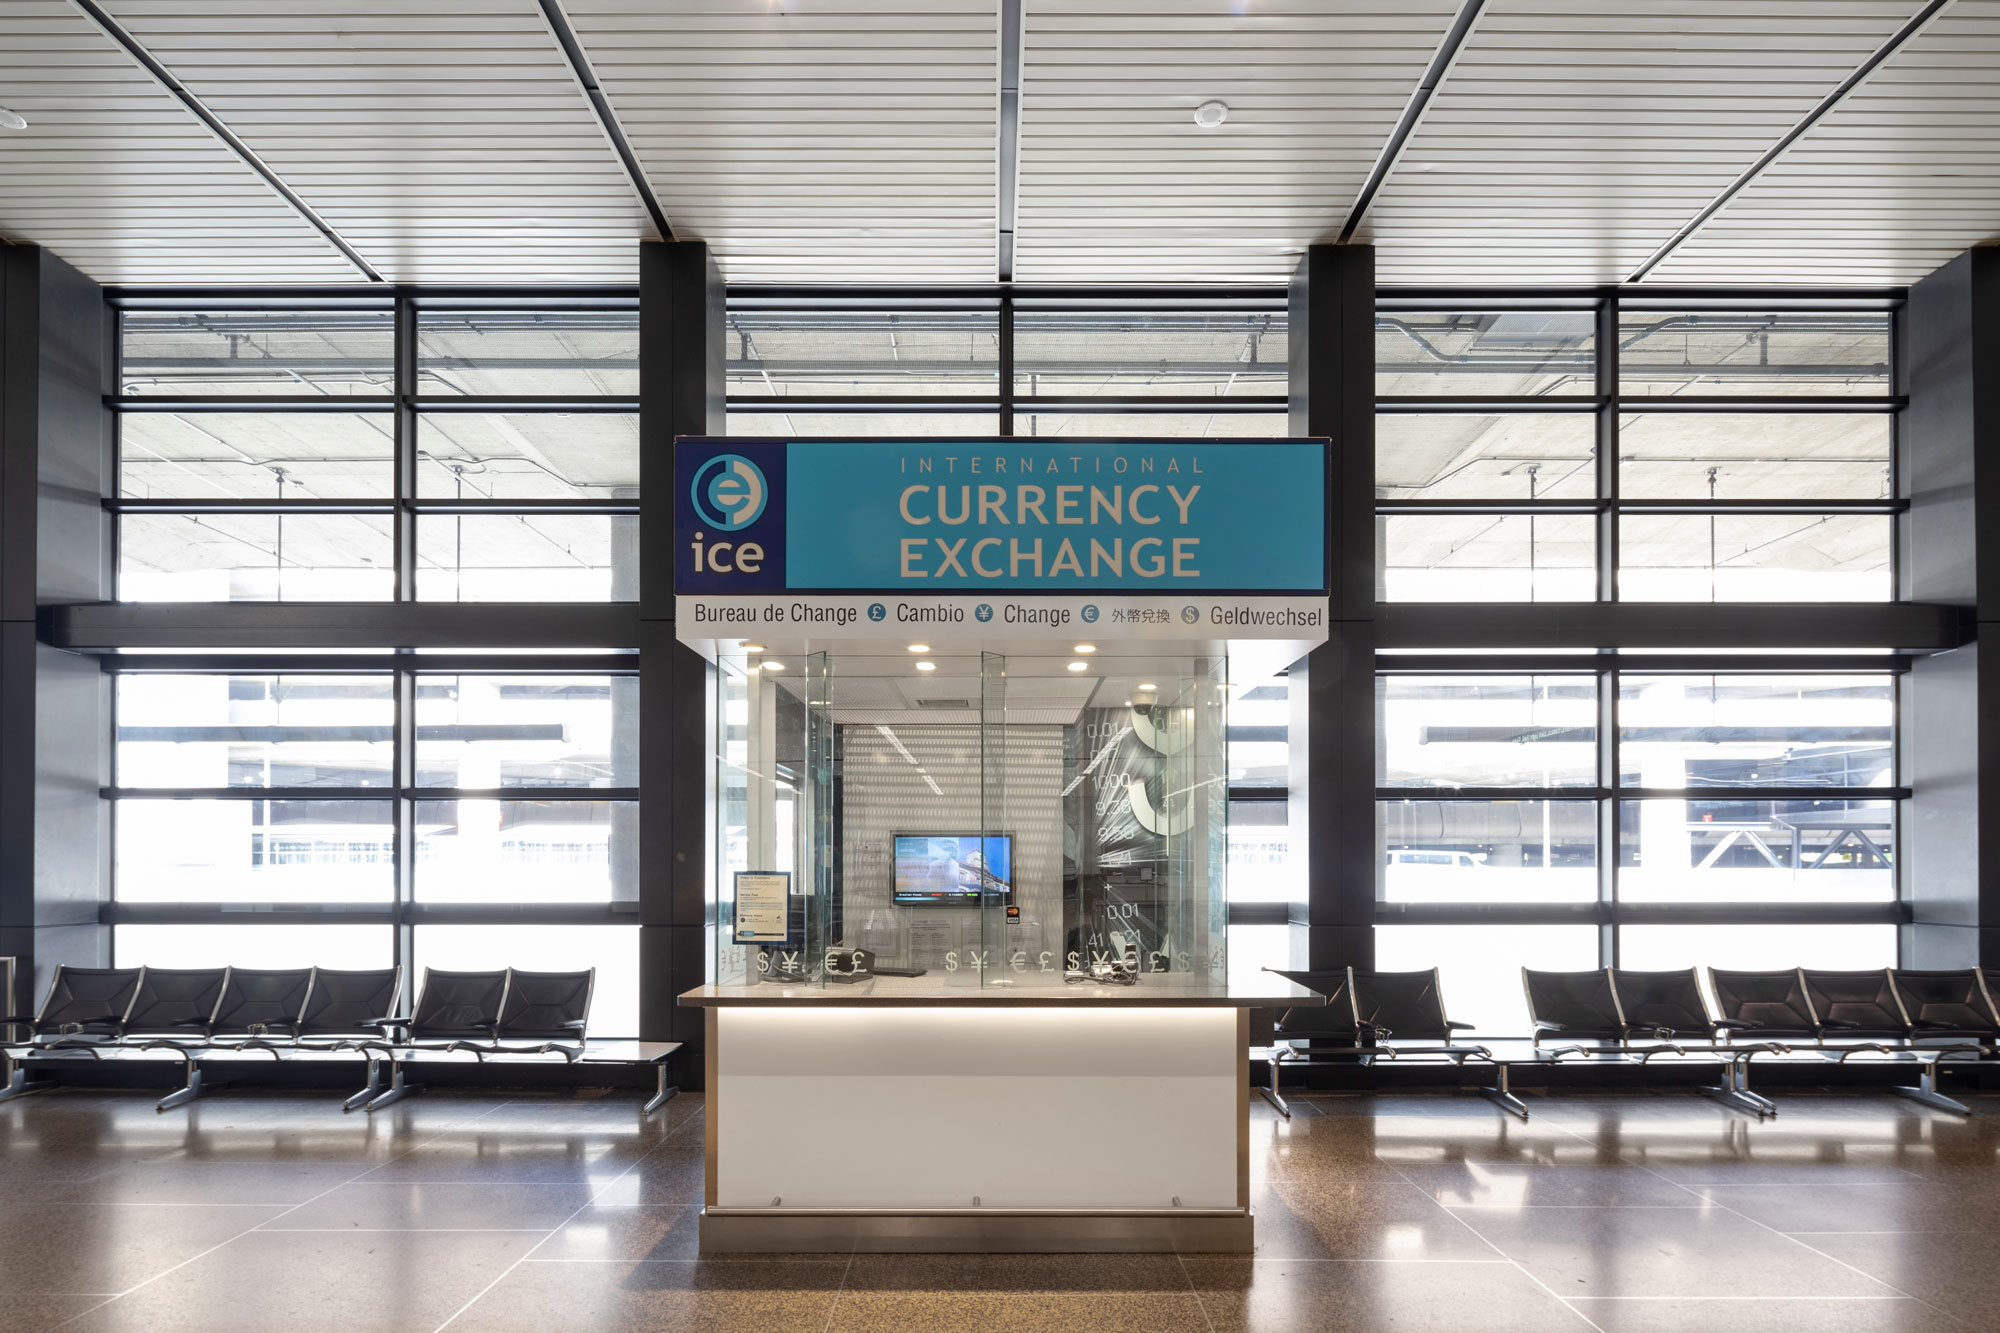 SEA International Currency Exchange Pre-Security Baggage Claim